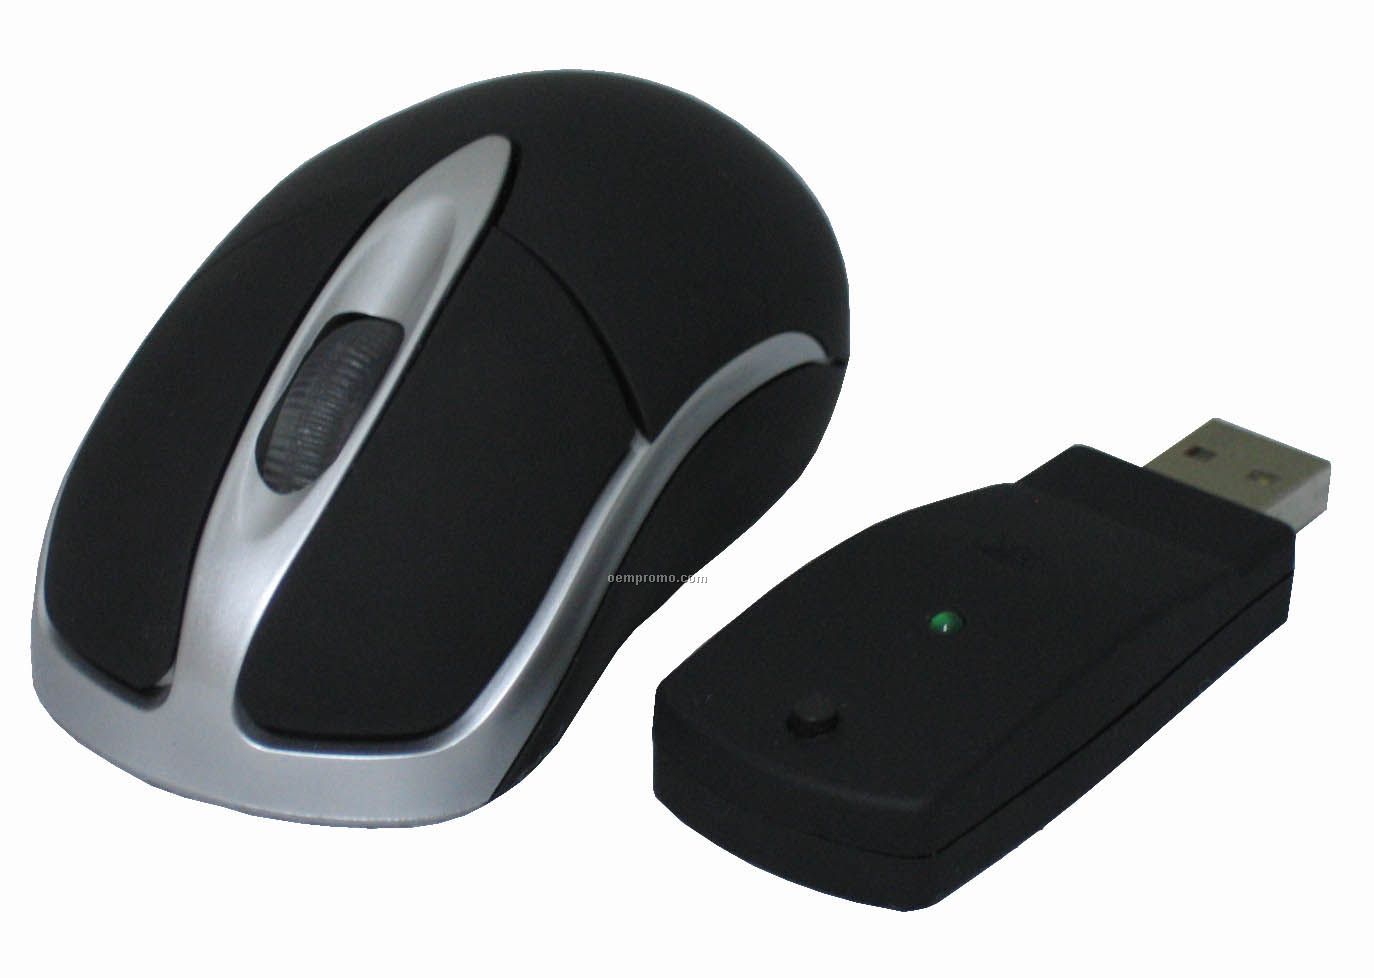 Wireless Miniature Optical Mouse